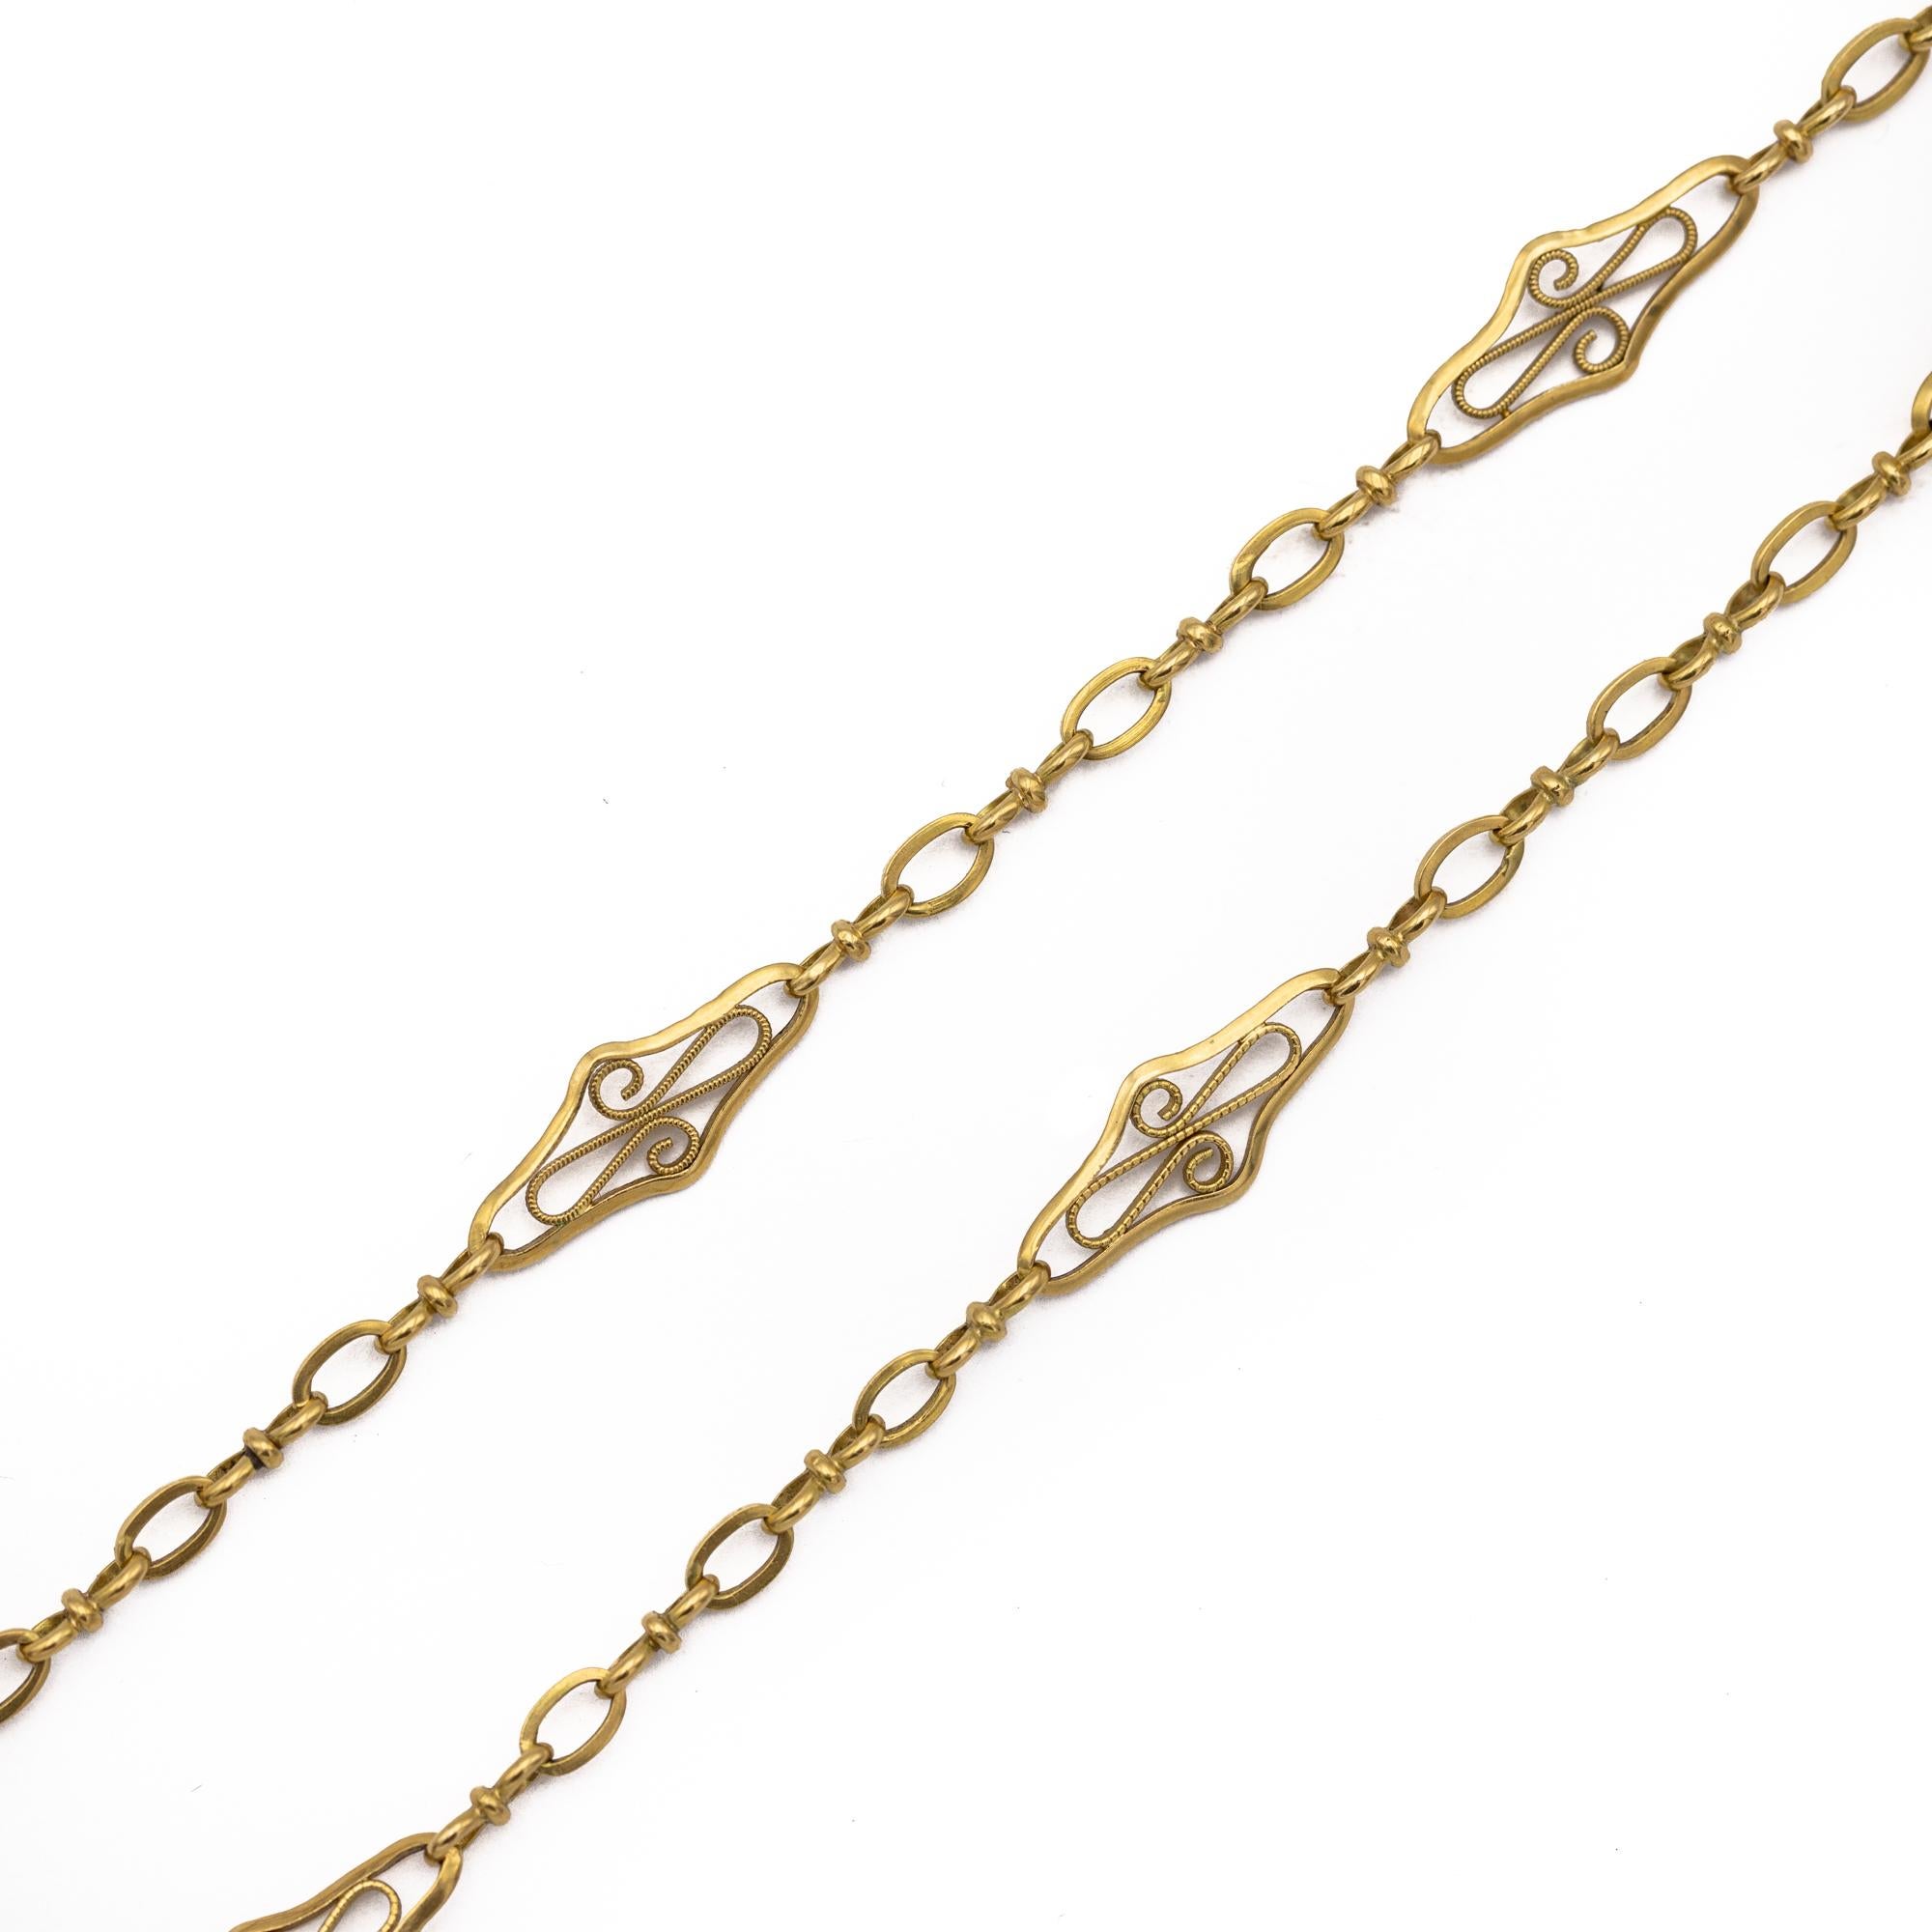 Antique 18k gold Sautoir necklace, 157.5cm long guard, French Victorian chain For Sale 4